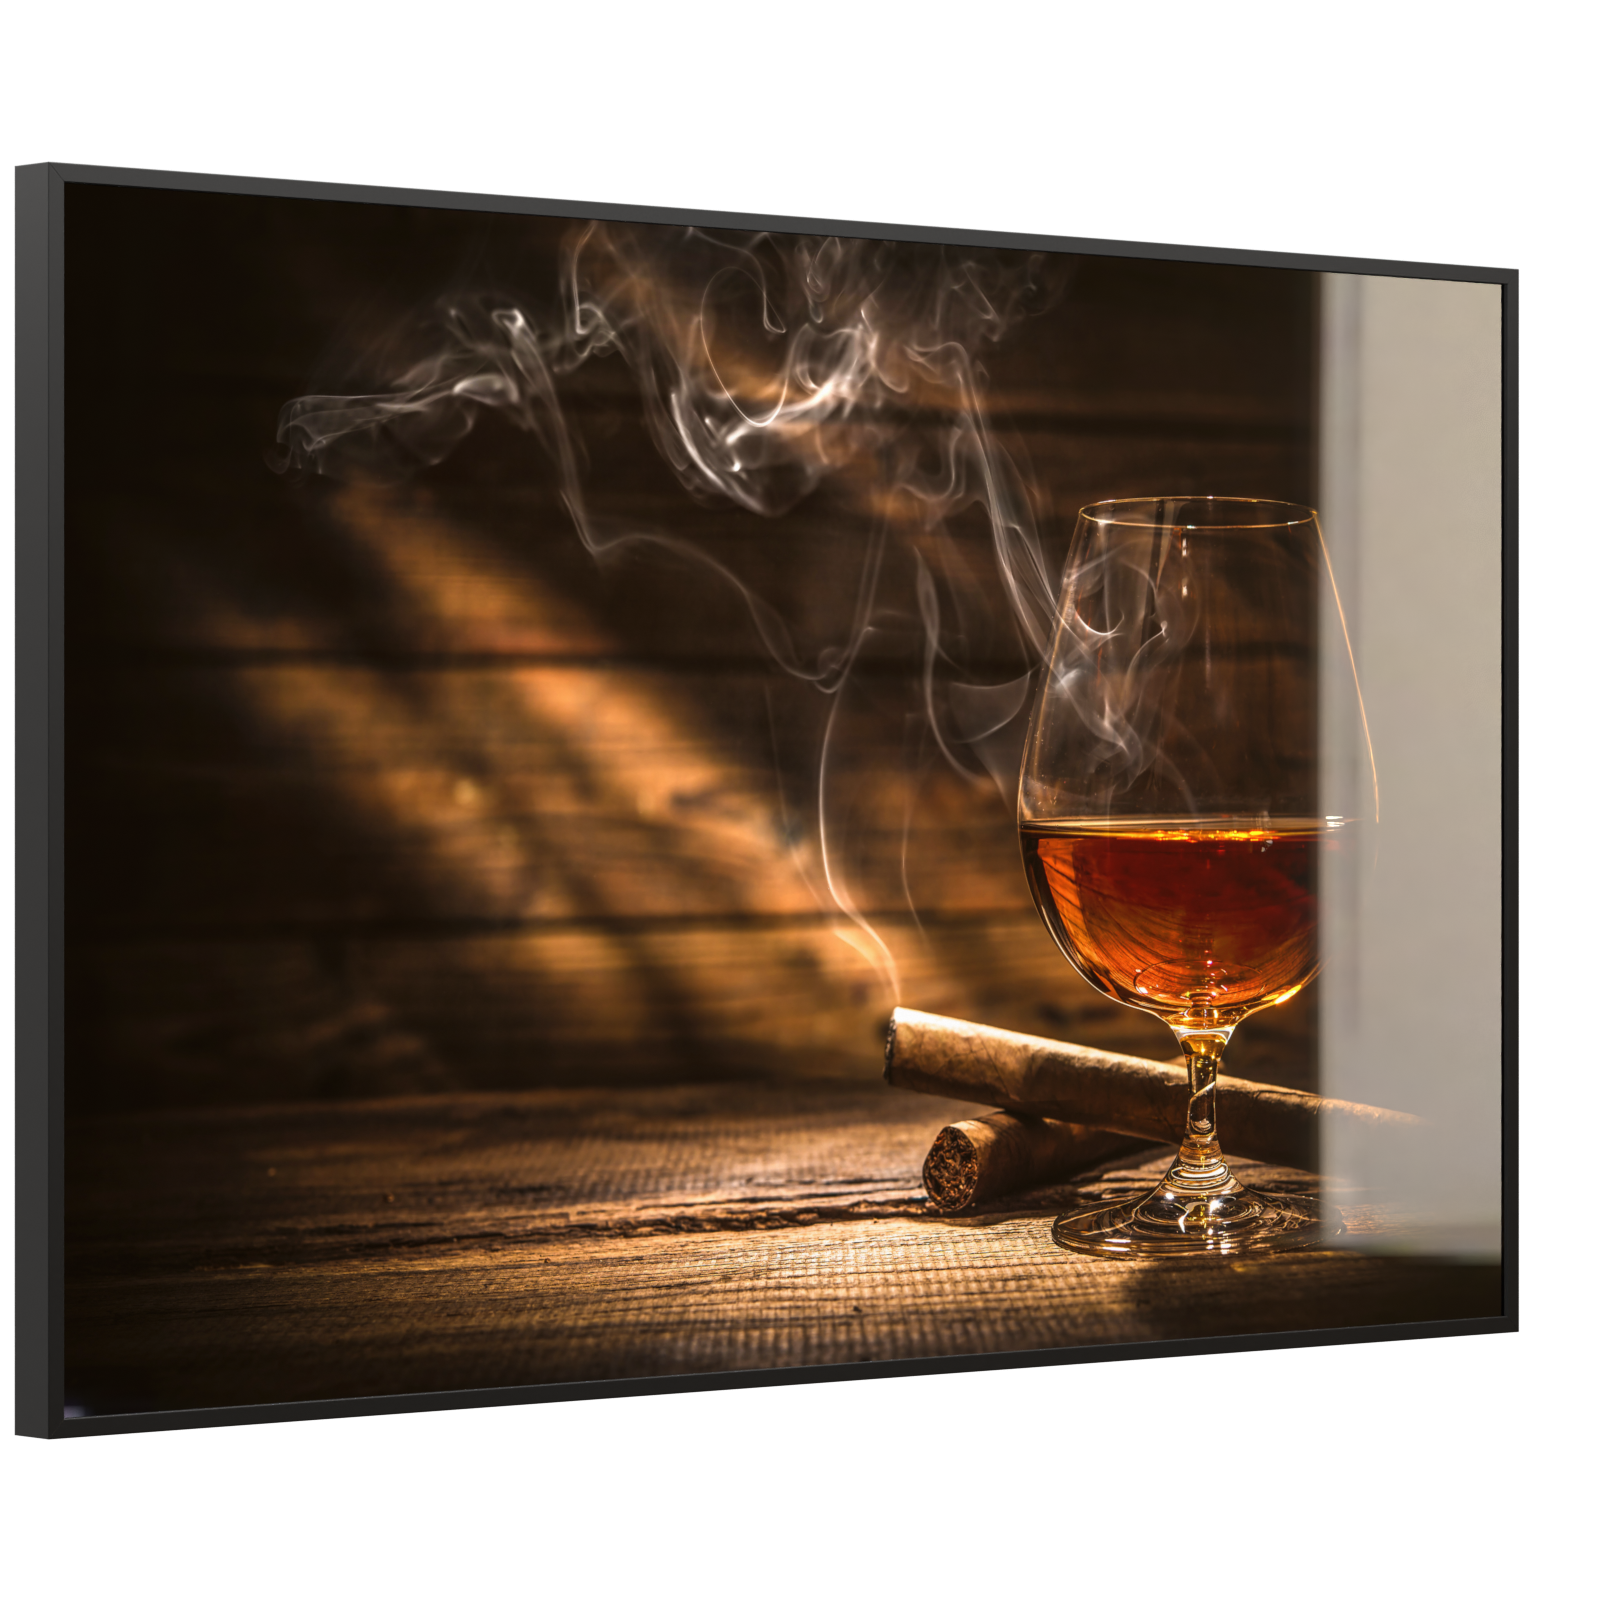 Deko Glas Wandbild Motiv 004 Whisky mit Zigarre